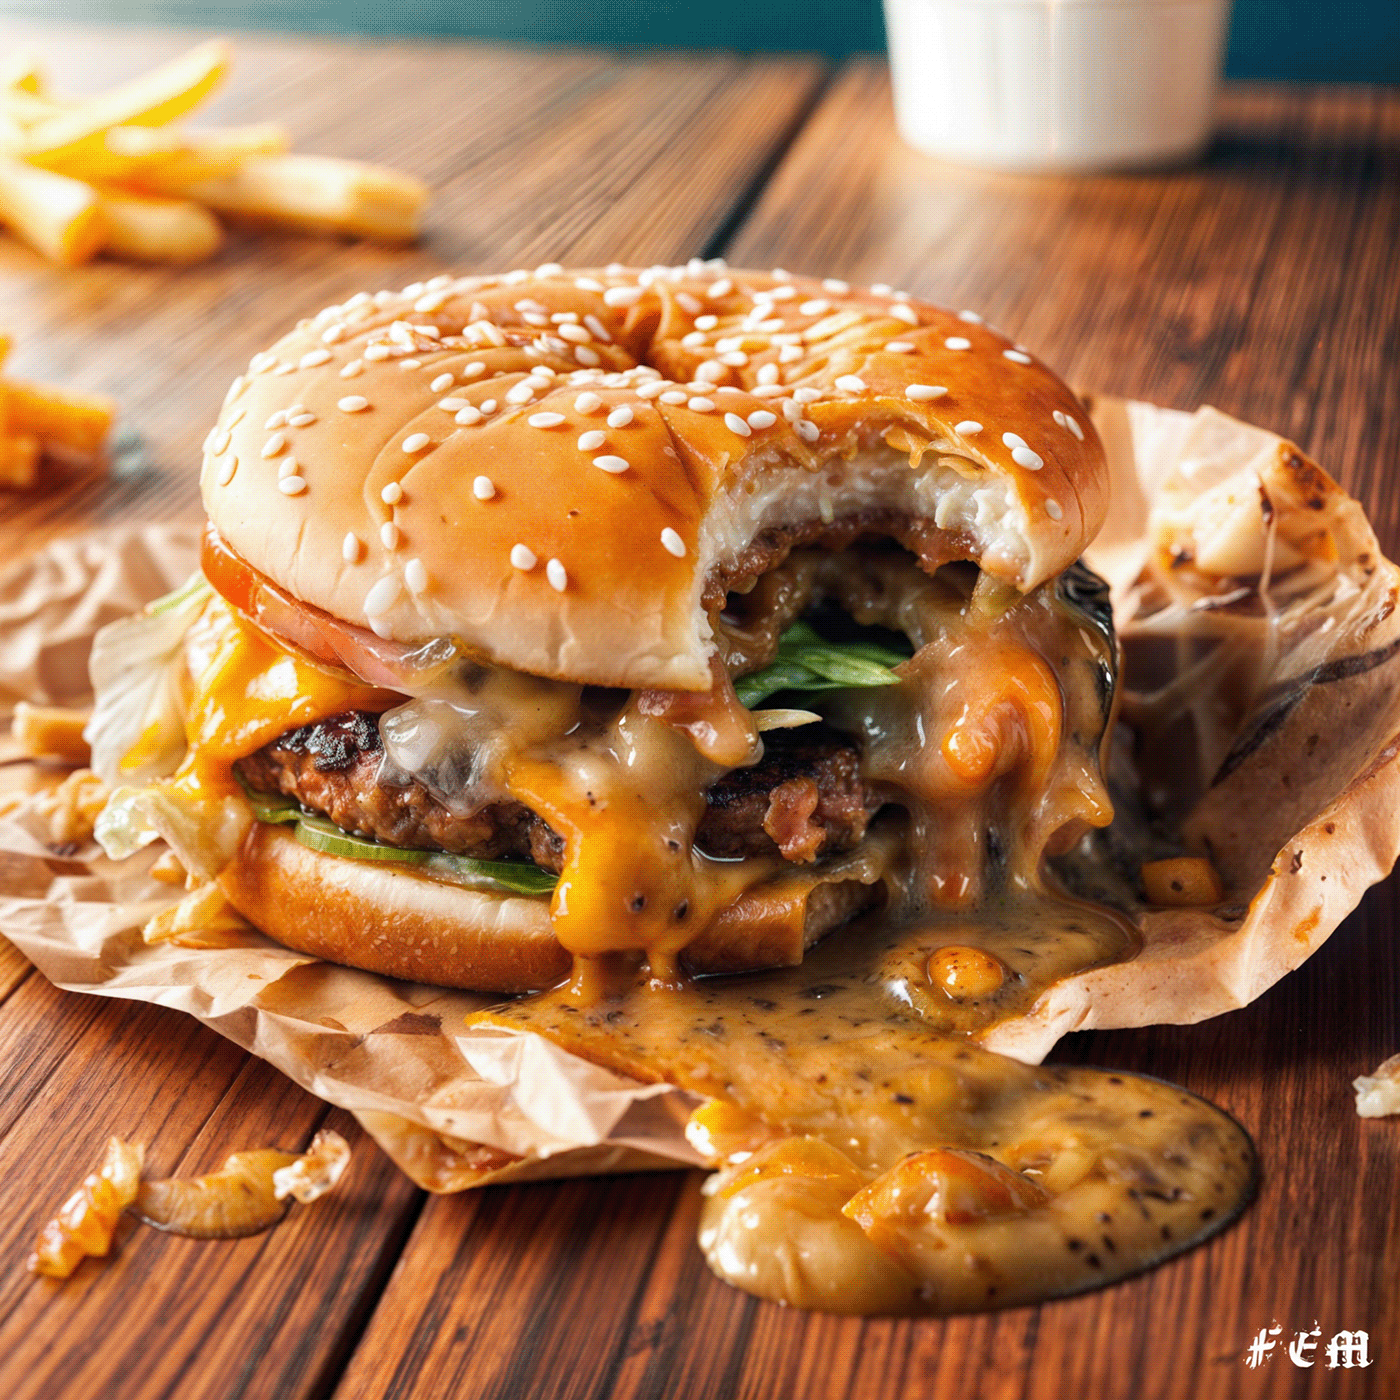 Fast food restaurant Food  burger hamburguer burguer comida restaurante realistic art